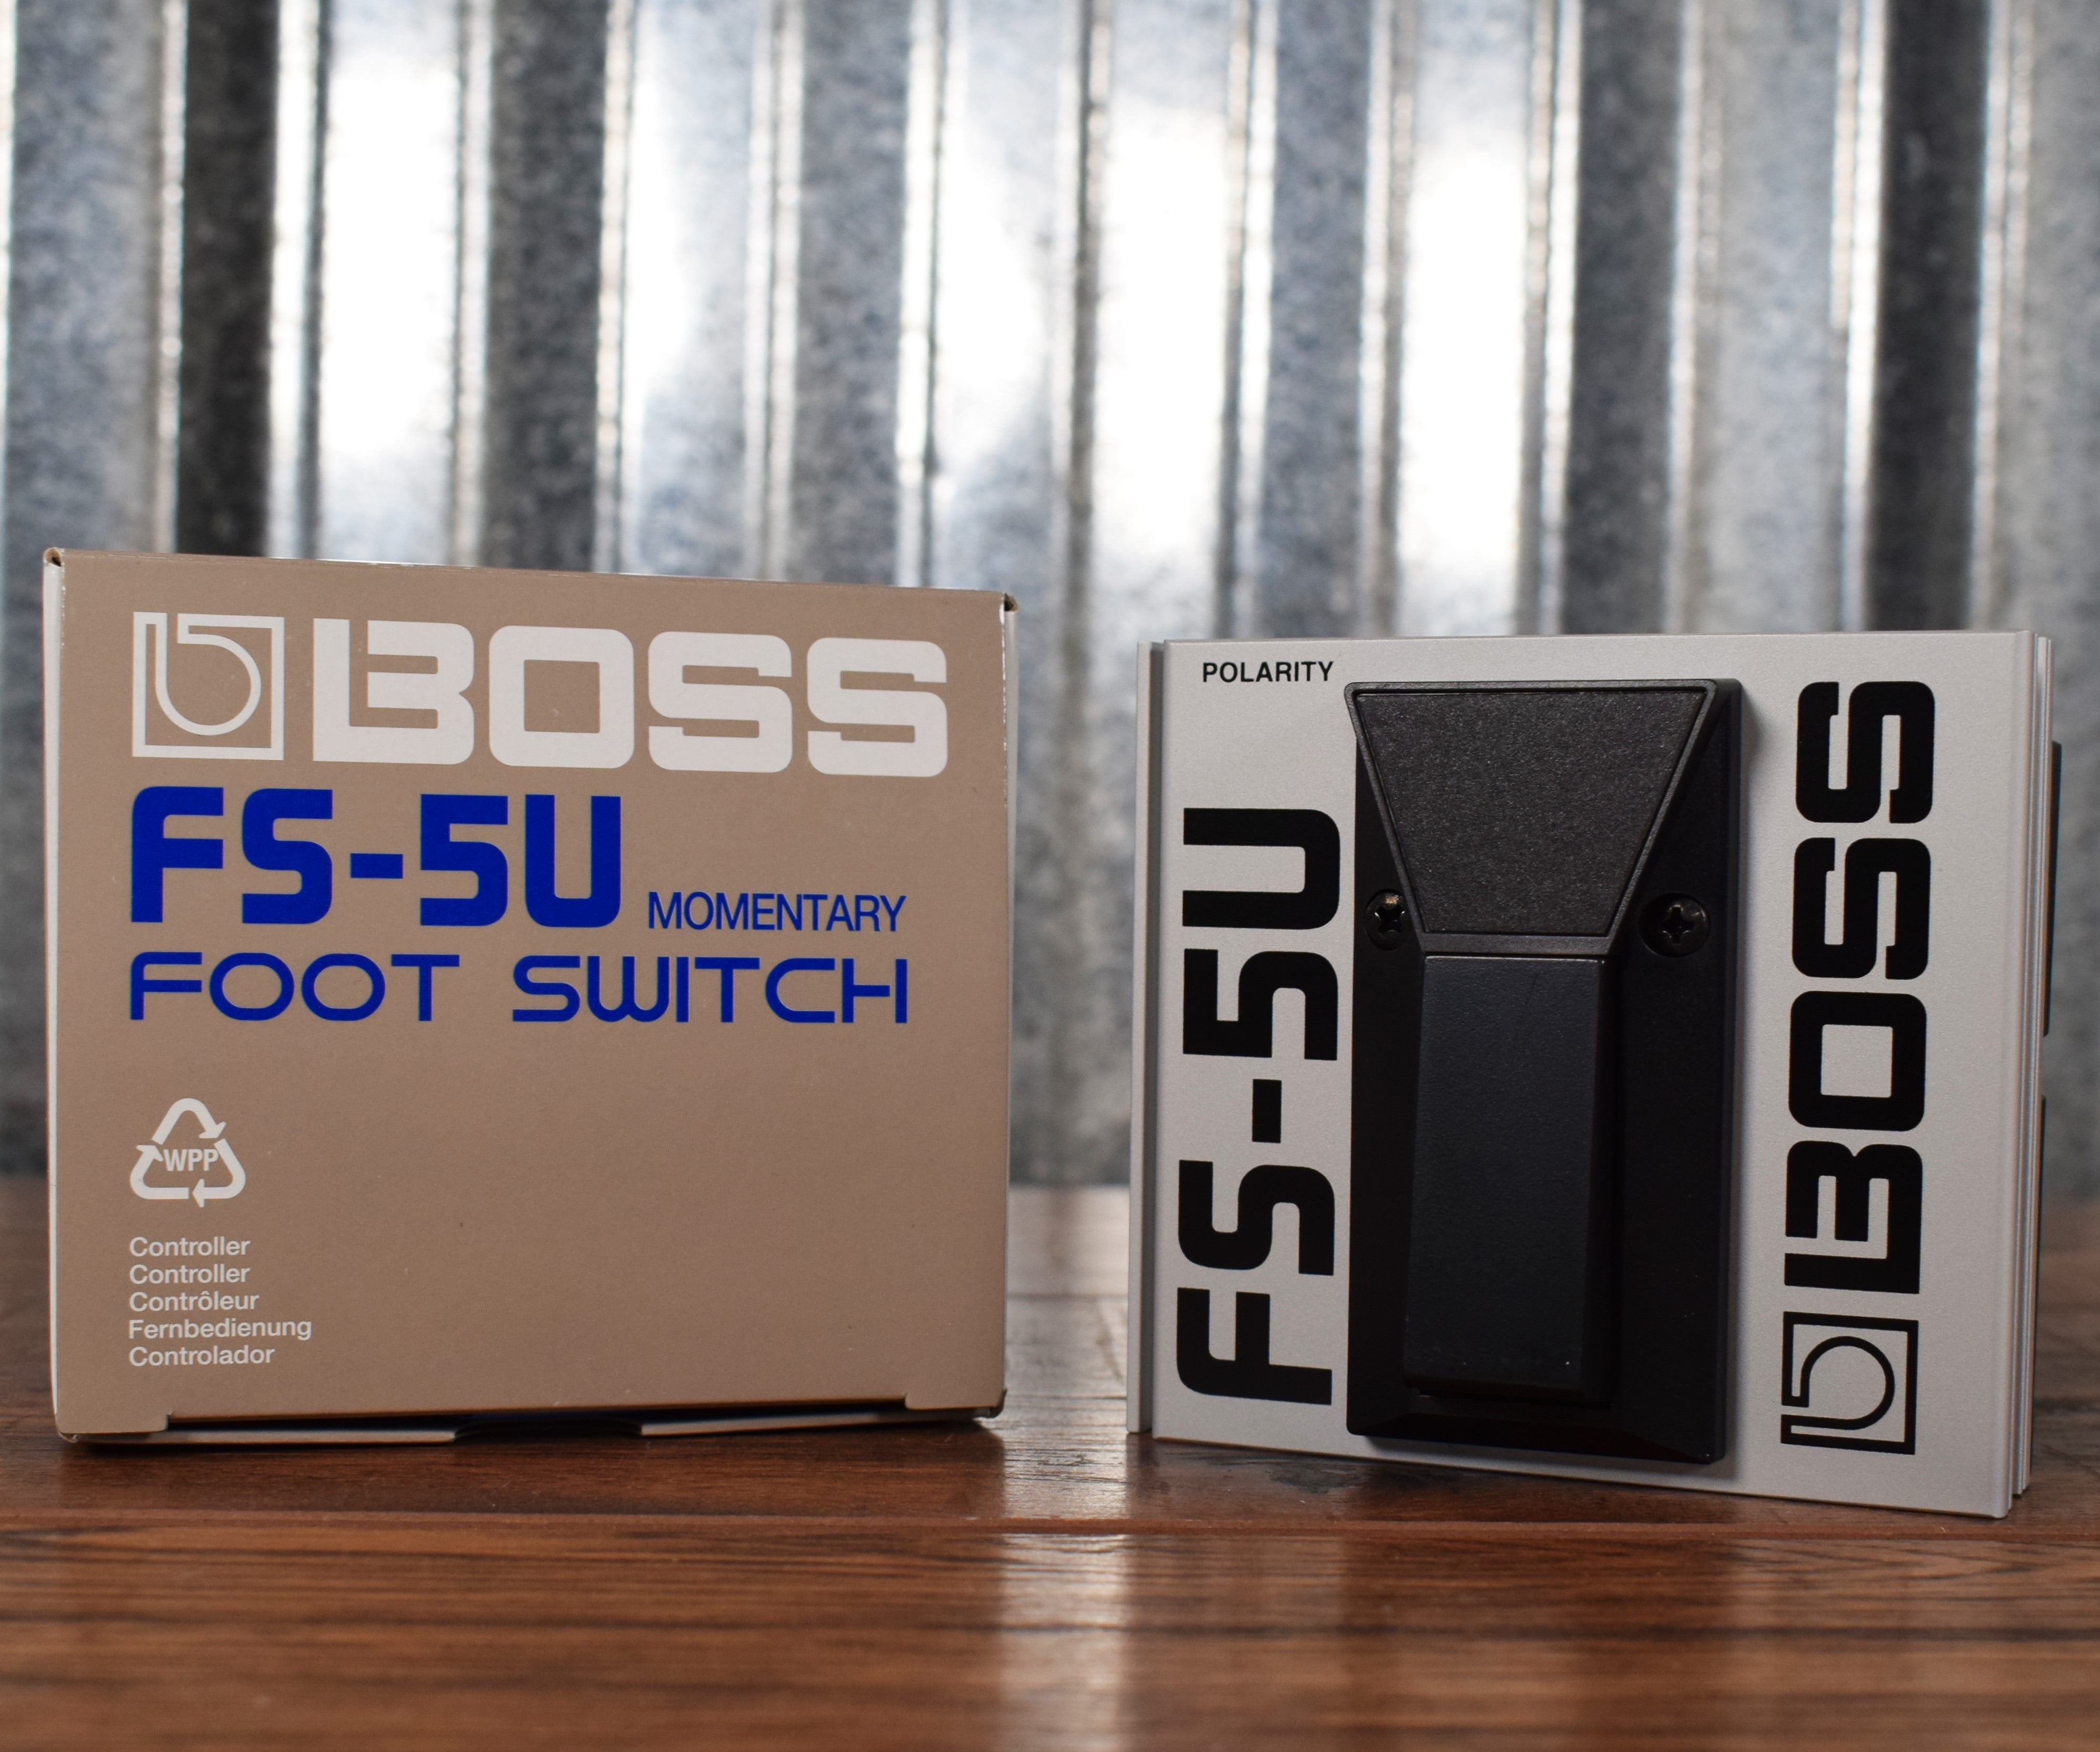 Traders　Boss　Switch　Bass　FS-5U　Foot　–　Controller　Specialty　Guitar　Keyboard　Effect　Pedal